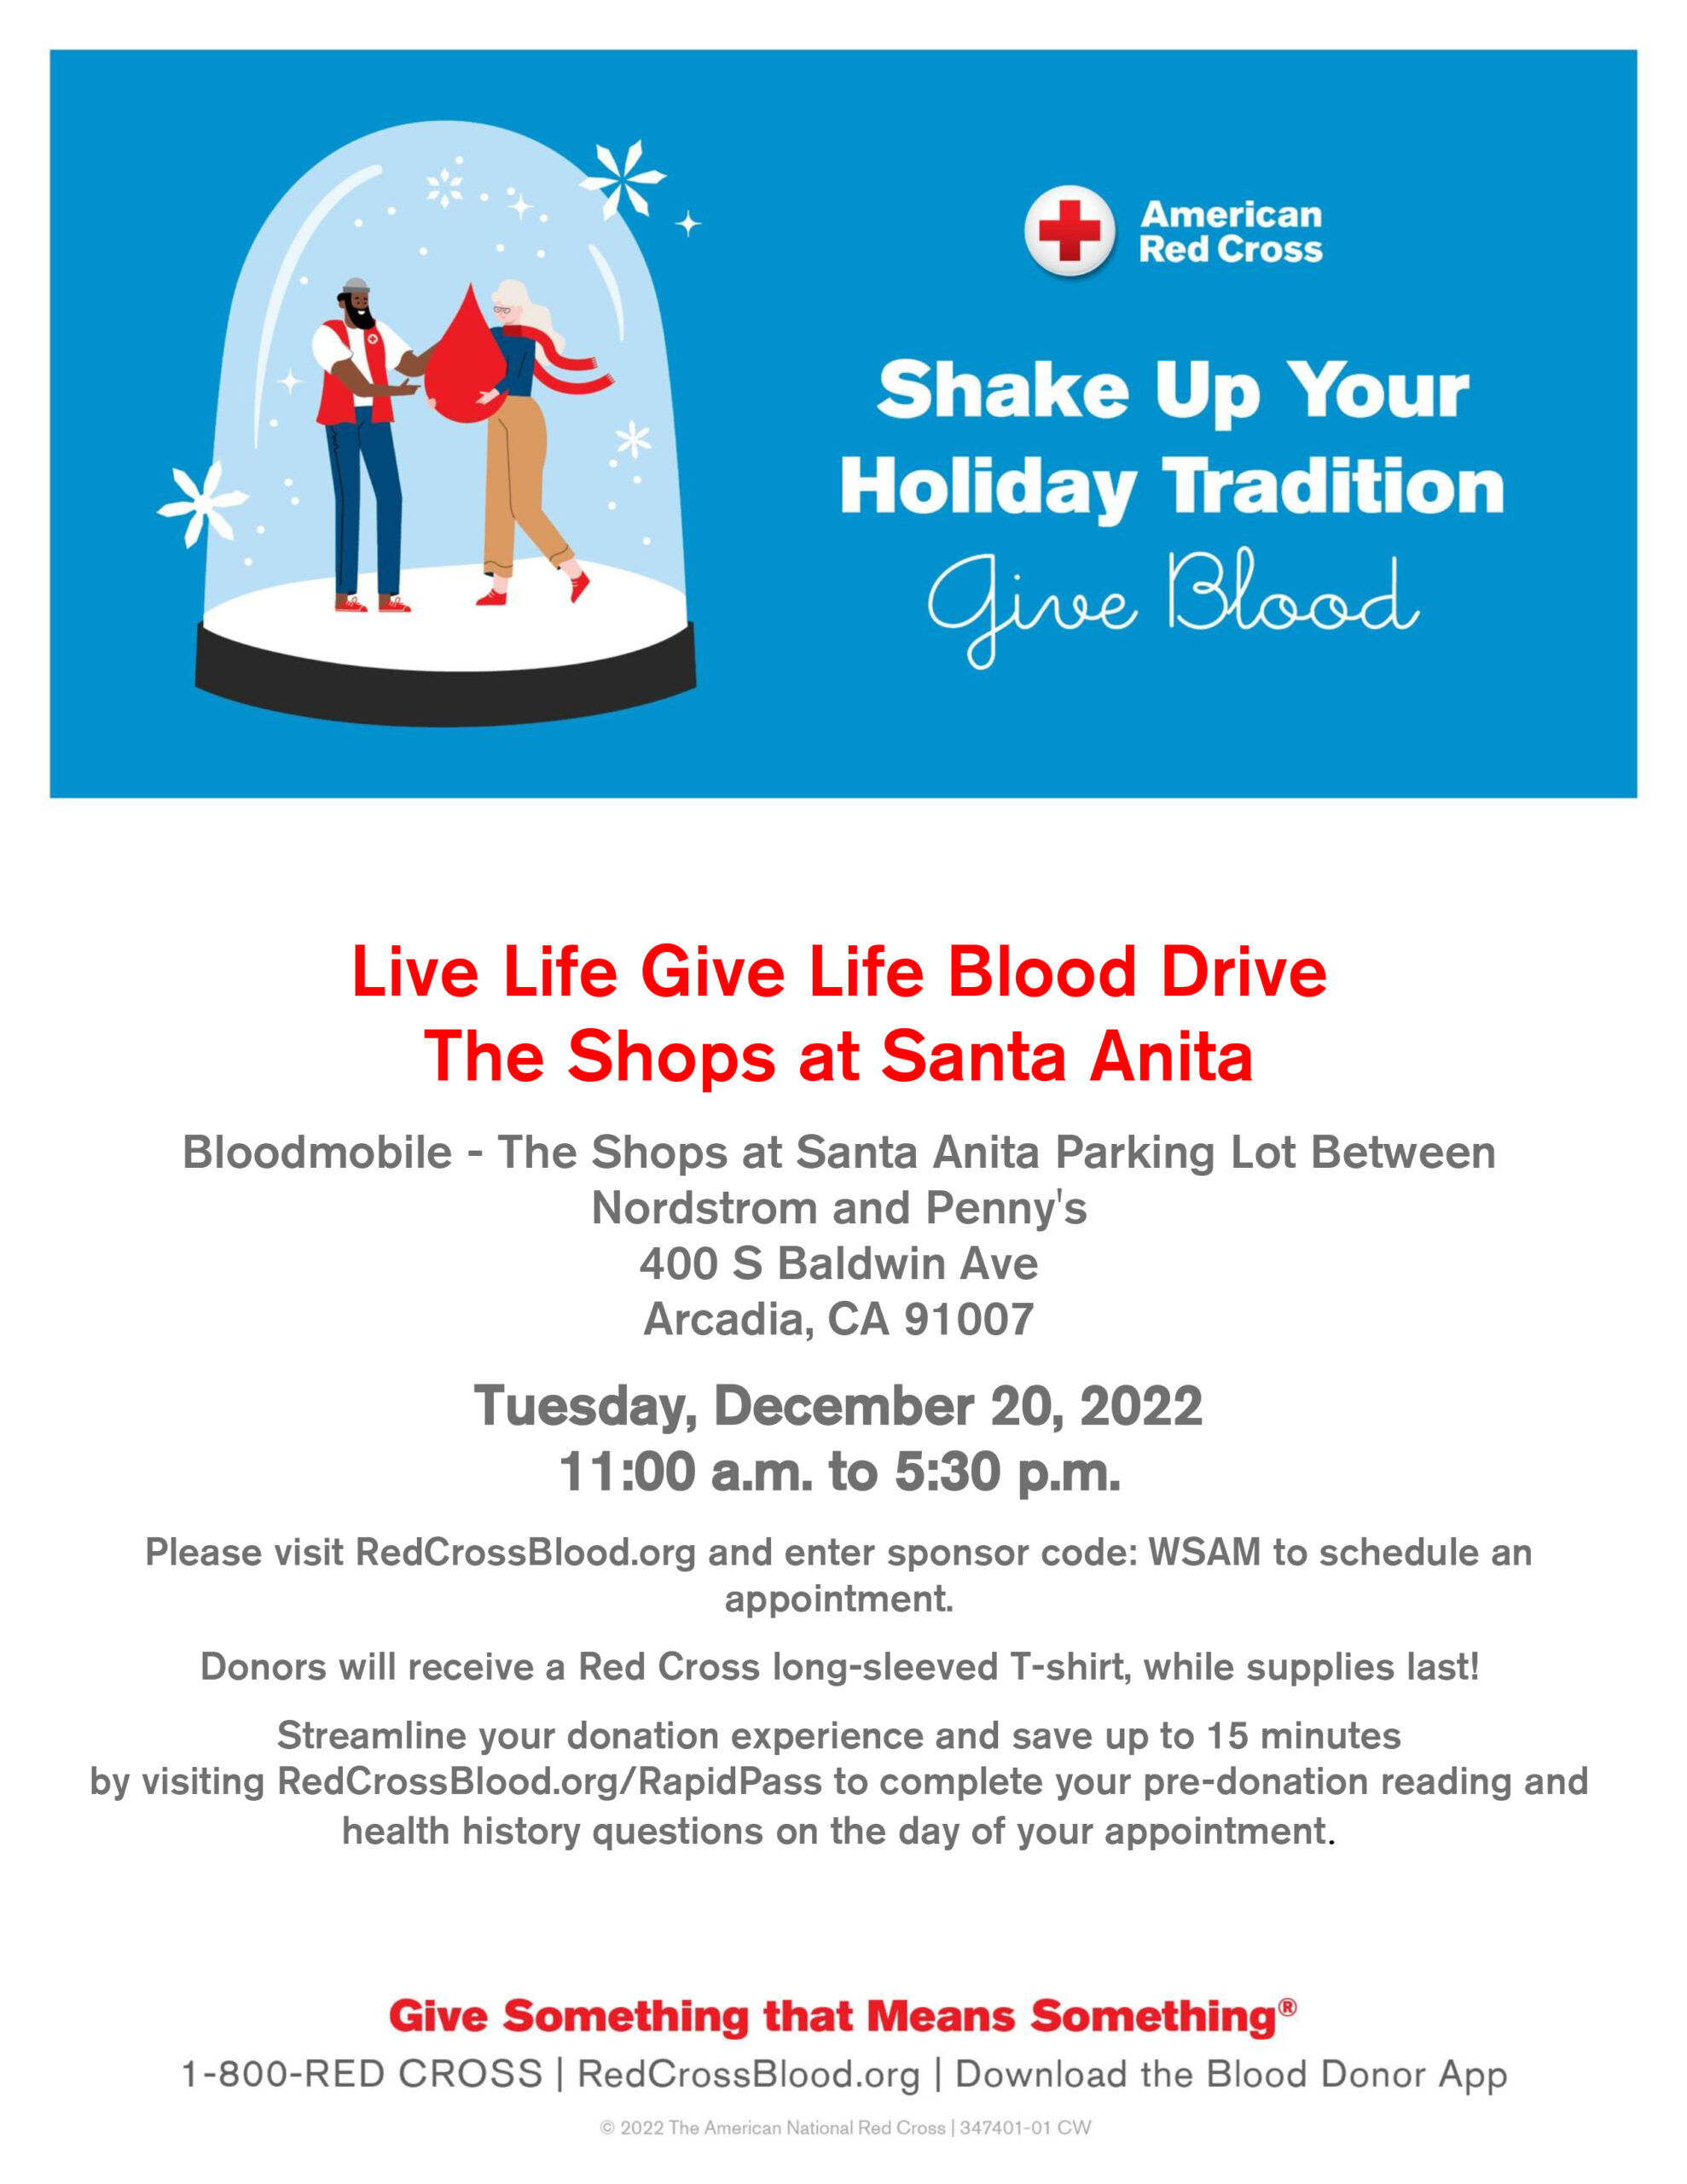 shops at santa anita blood drive with american red cross 